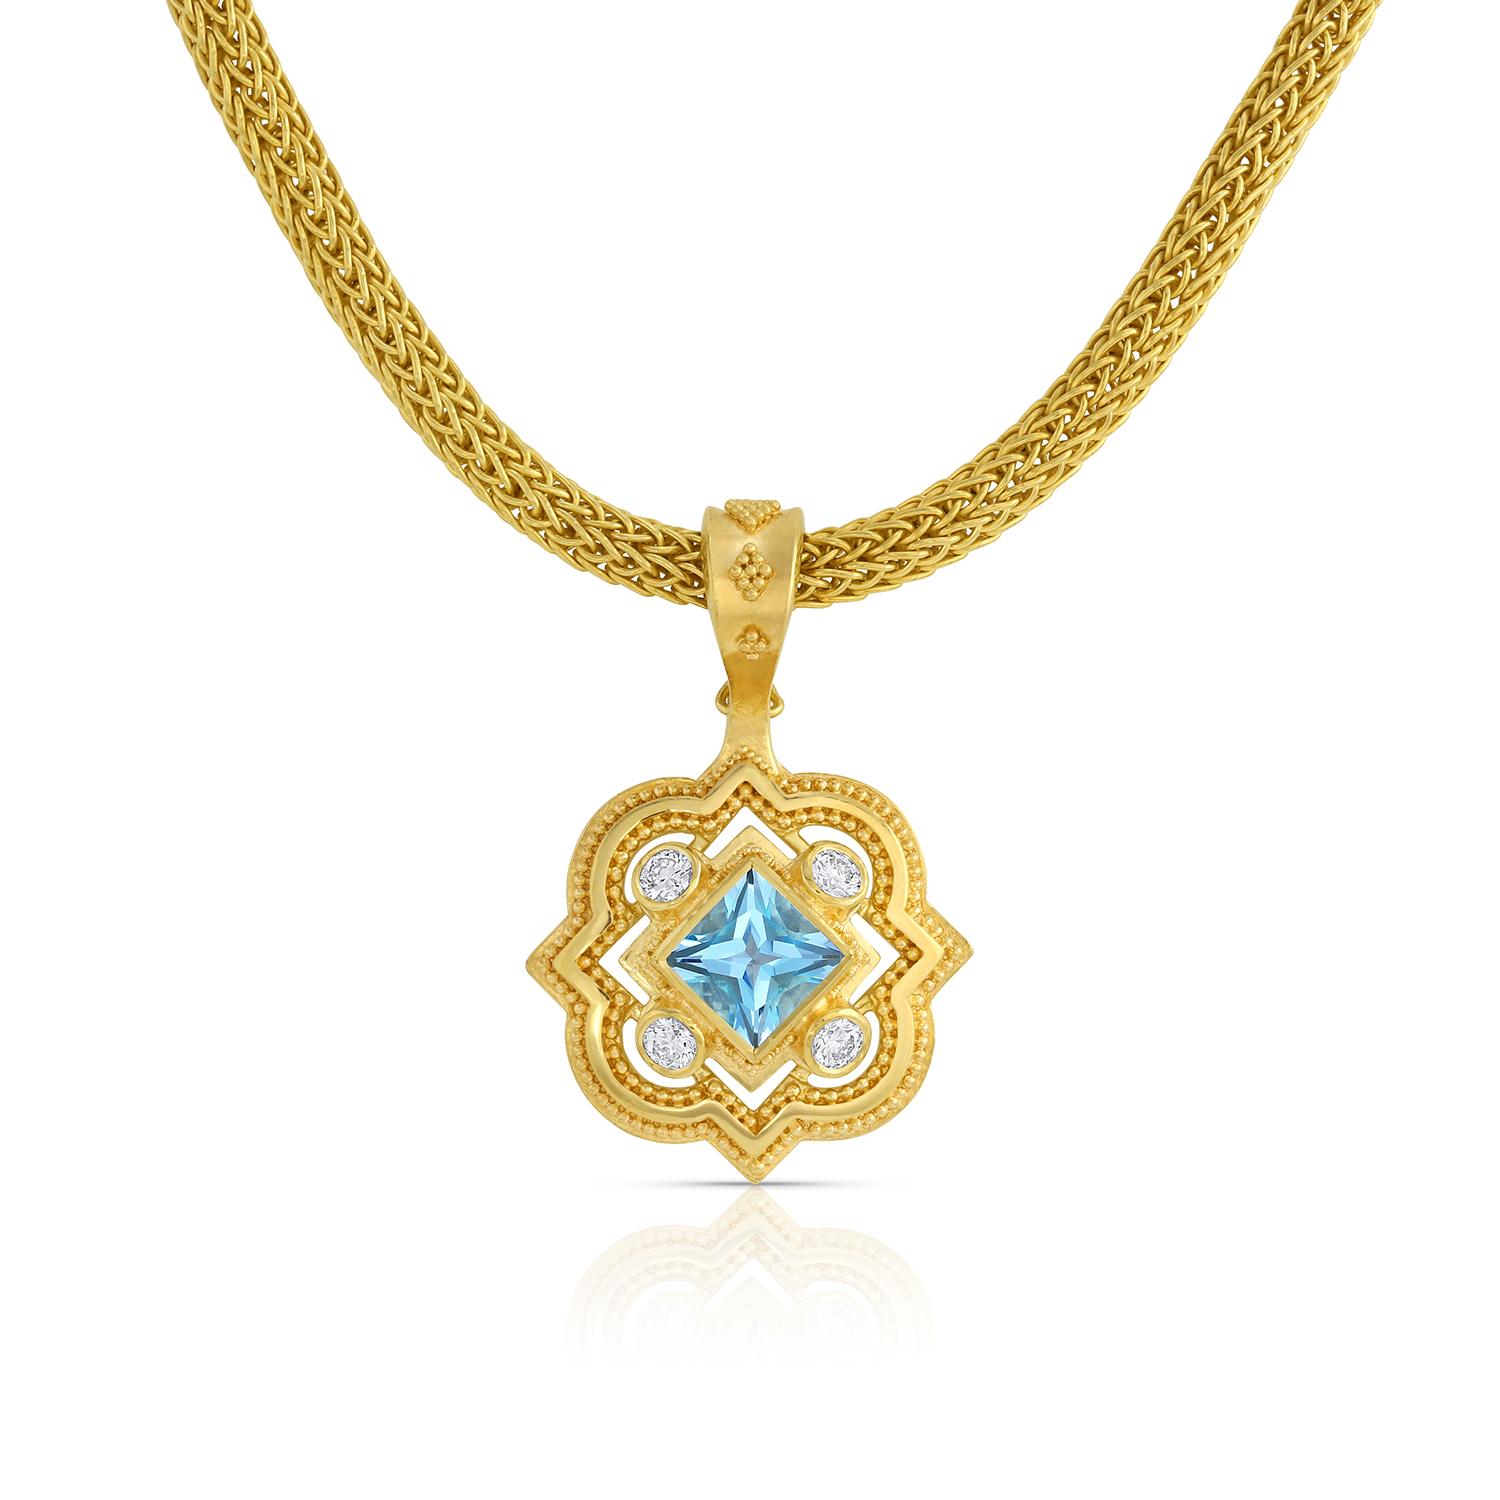 Artisan Kent Raible 18 Karat Gold Pendant with Aquamarine, Diamonds and Fine Granulation